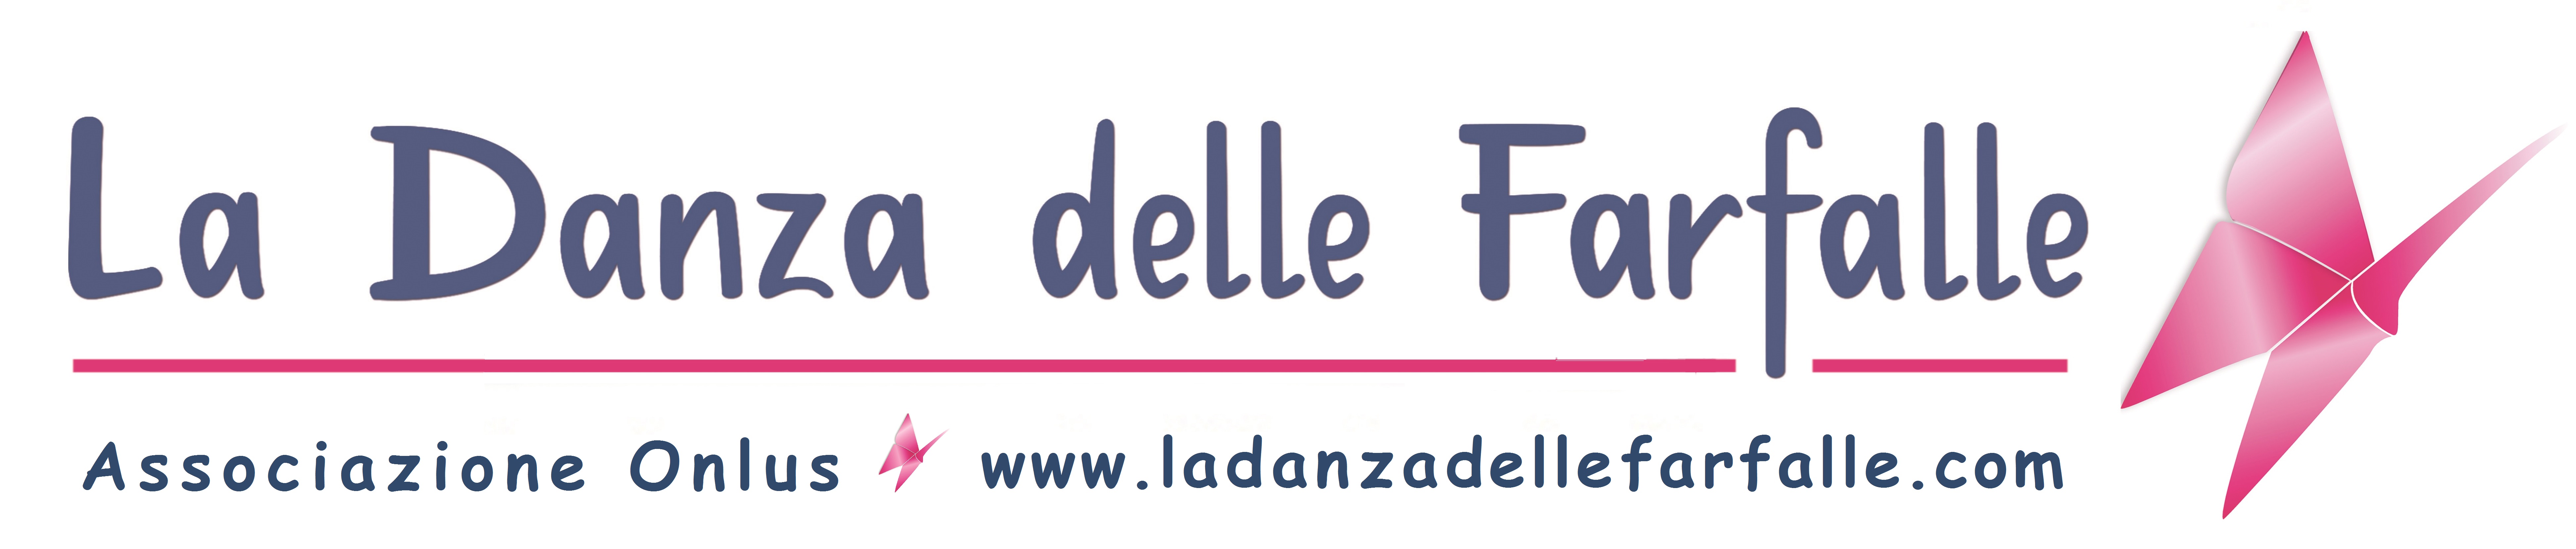 La-Danza-delle-Farfalle-Onlus-logo